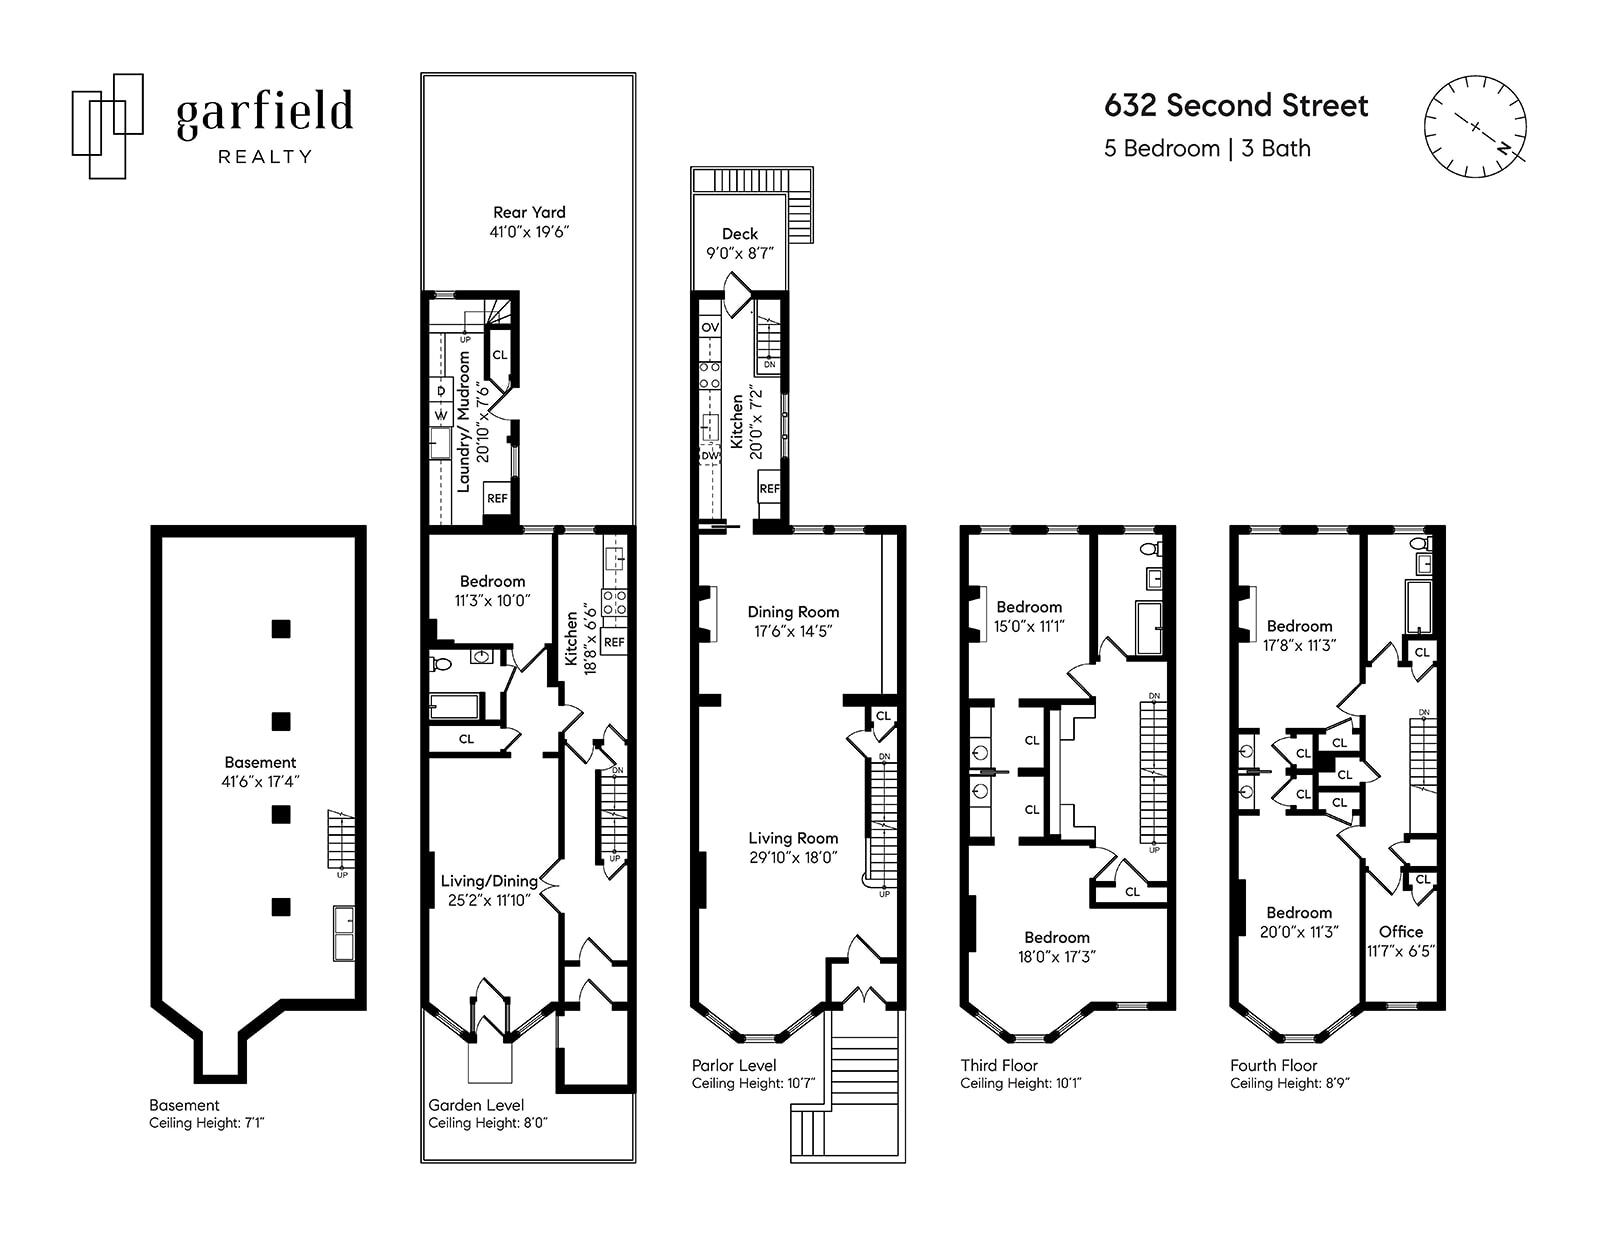 Floorplan of 632 2nd St